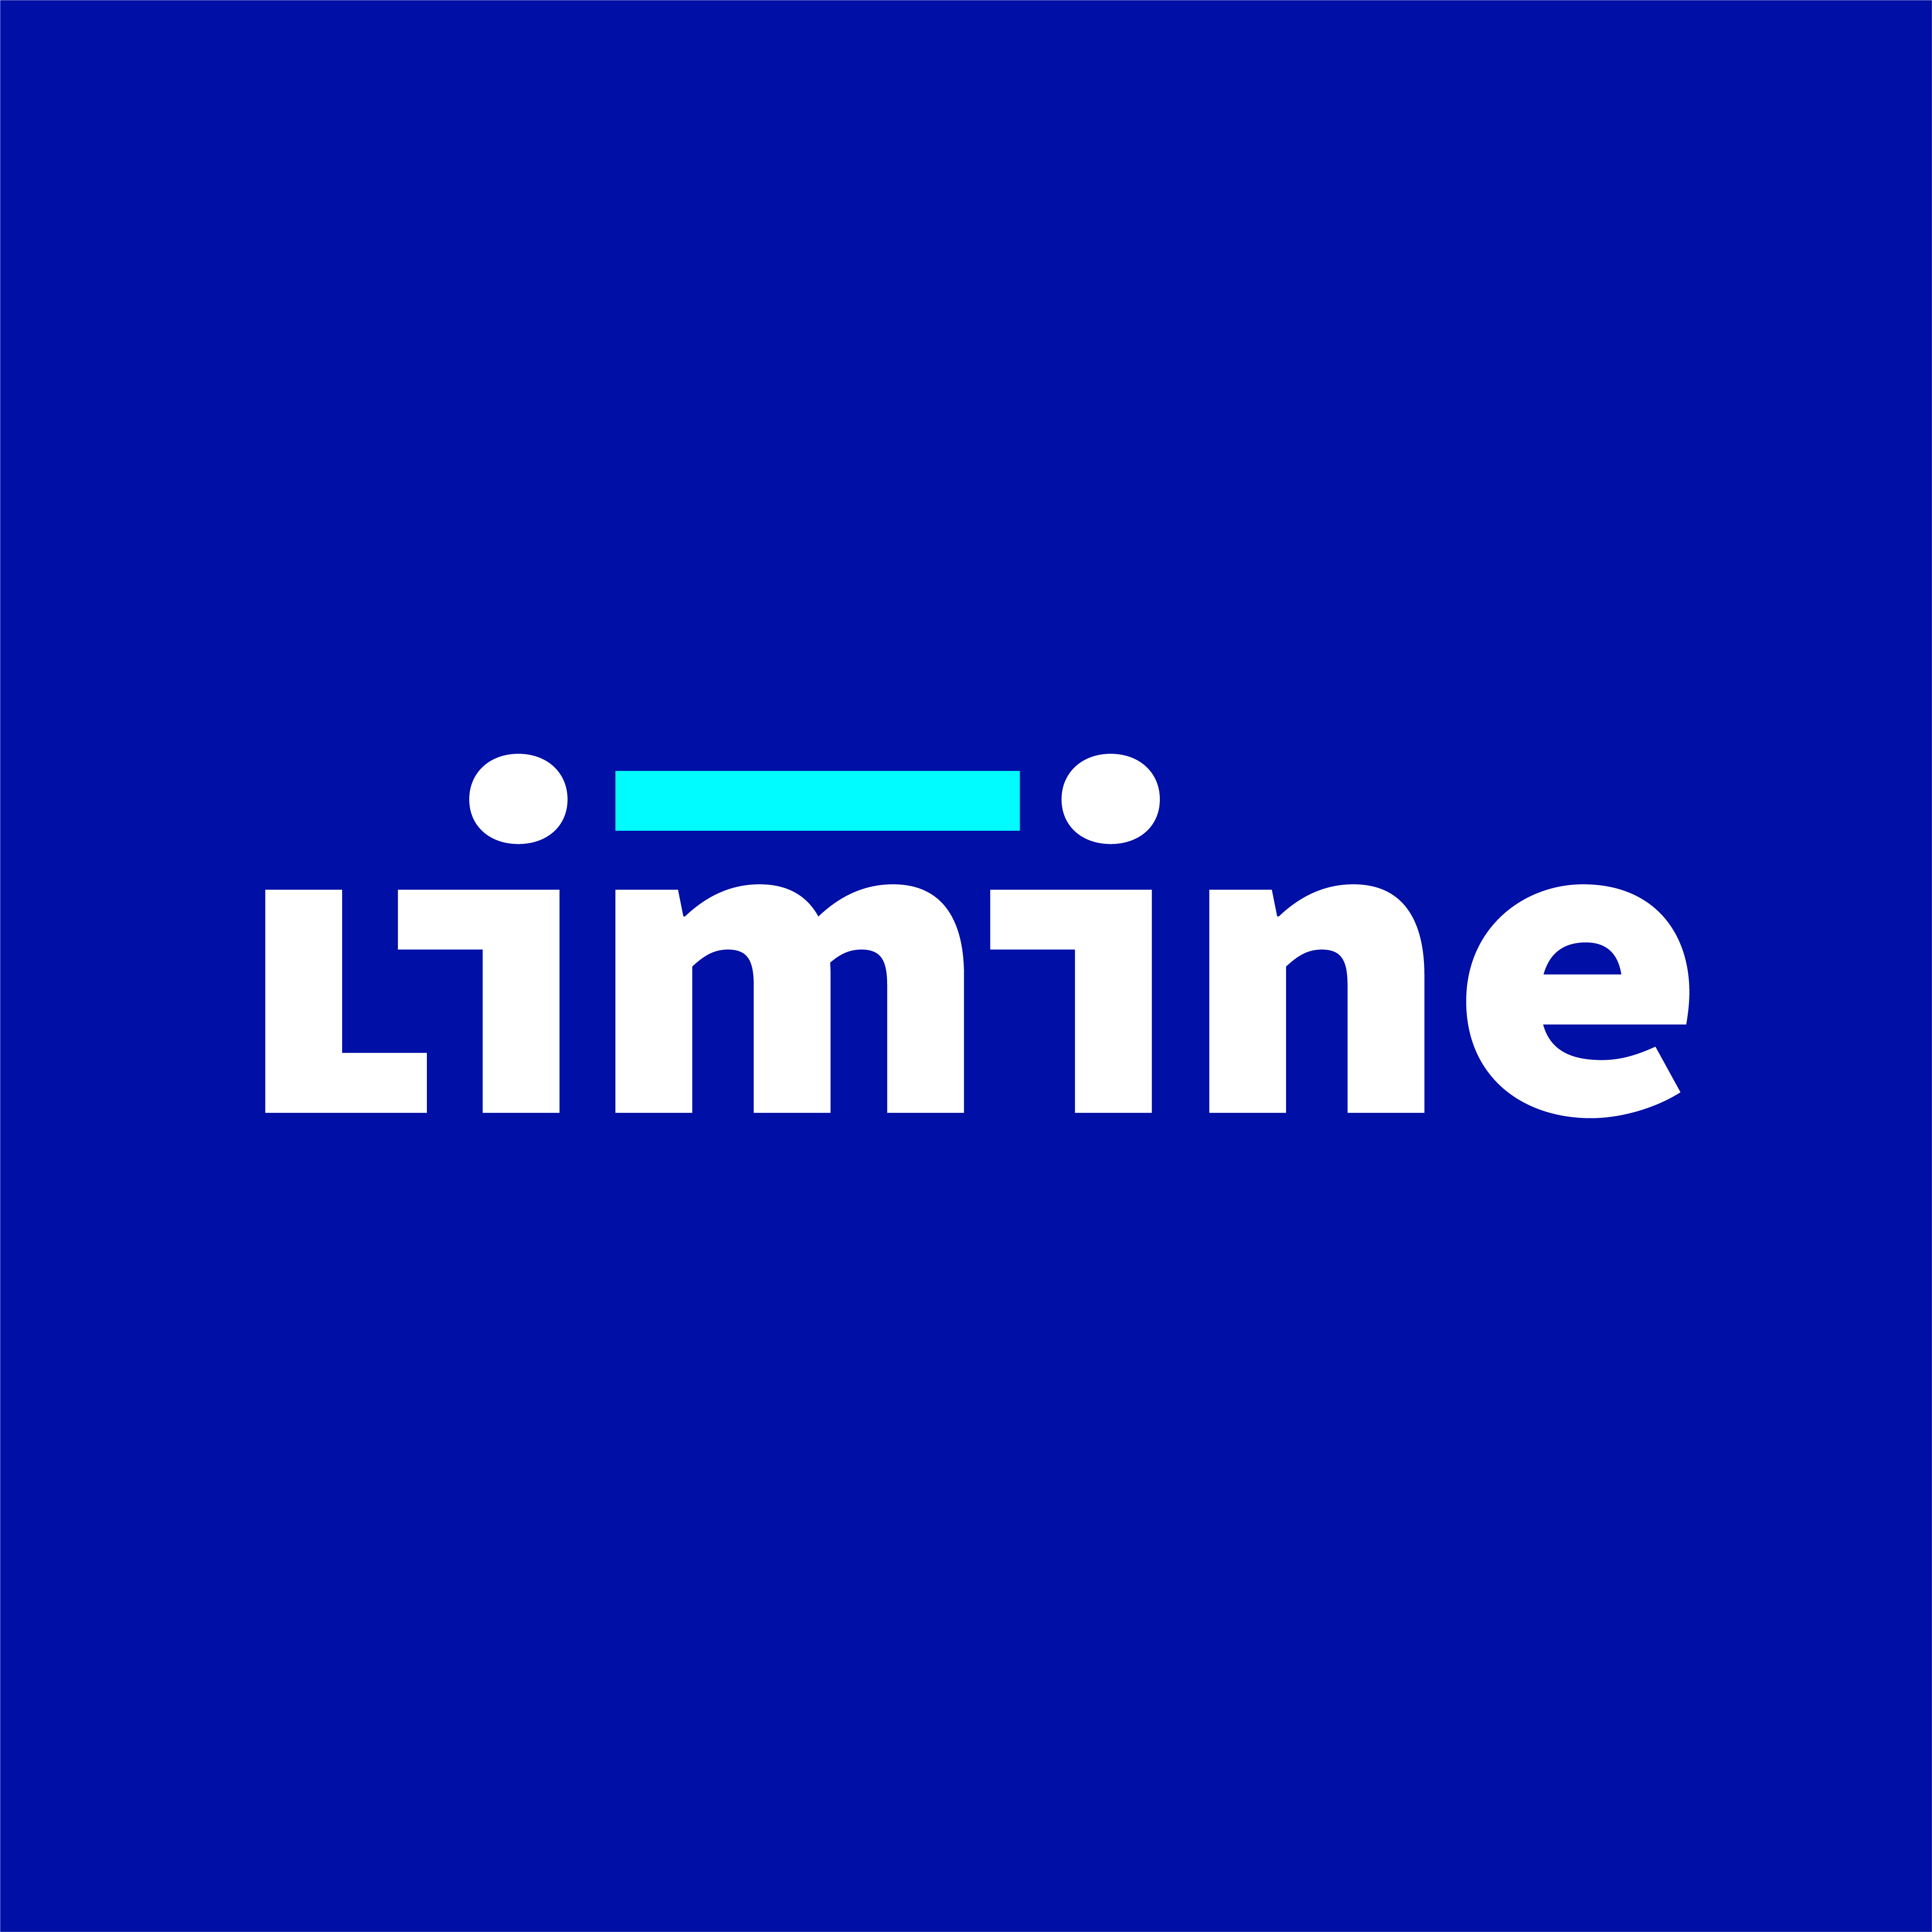 Limine